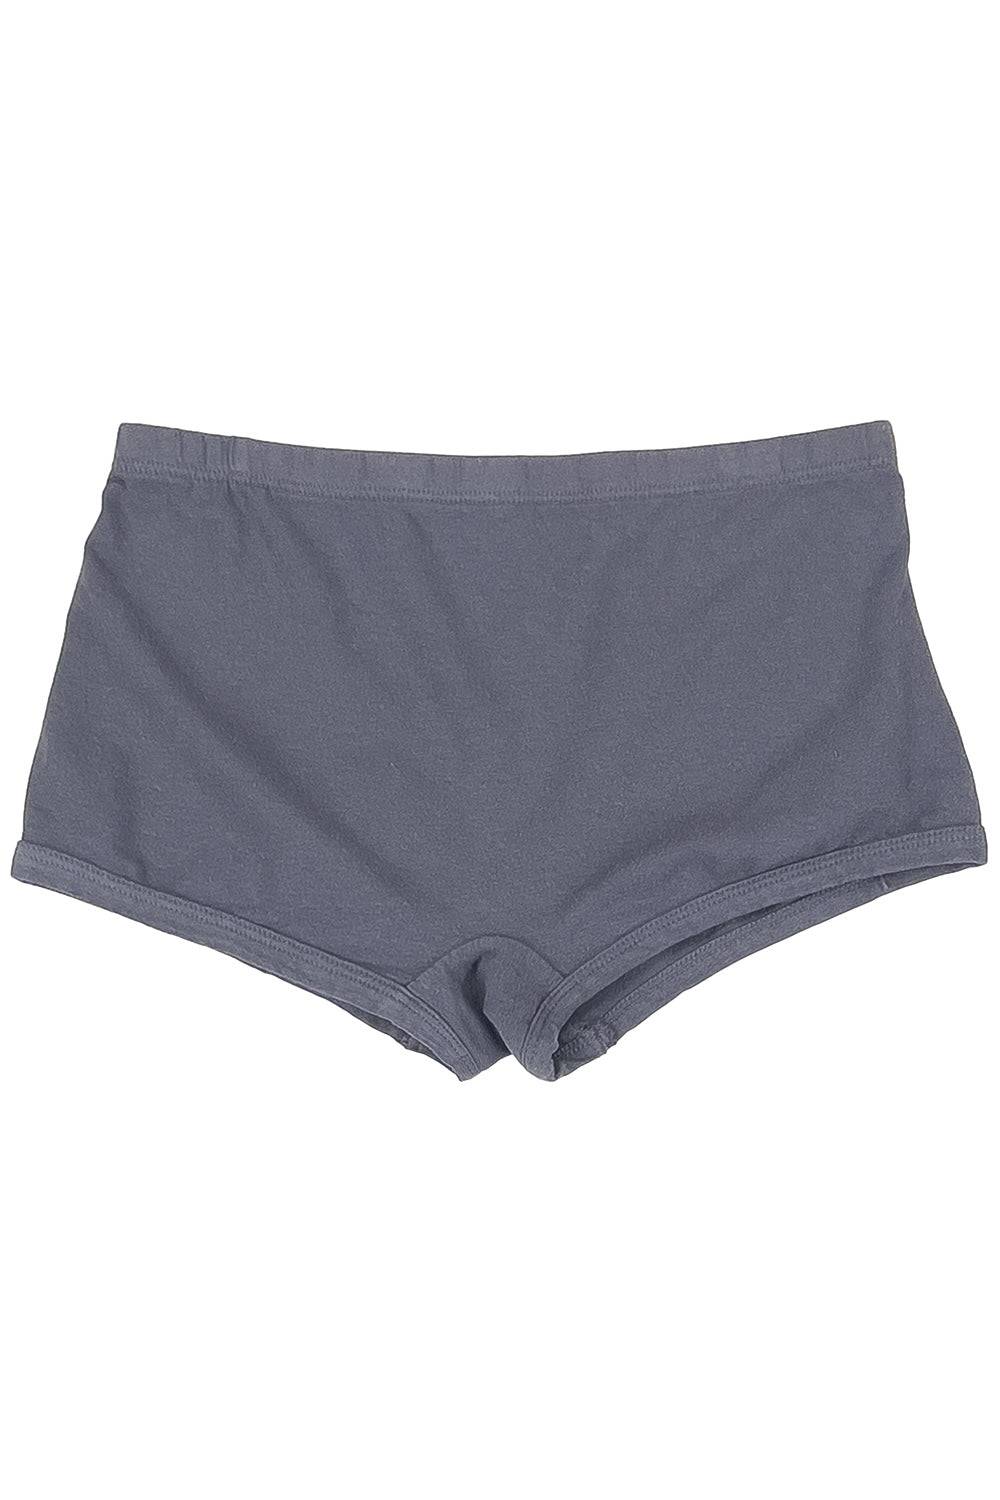 Boy Short | Jungmaven Hemp Clothing & Accessories / Color: Diesel Gray